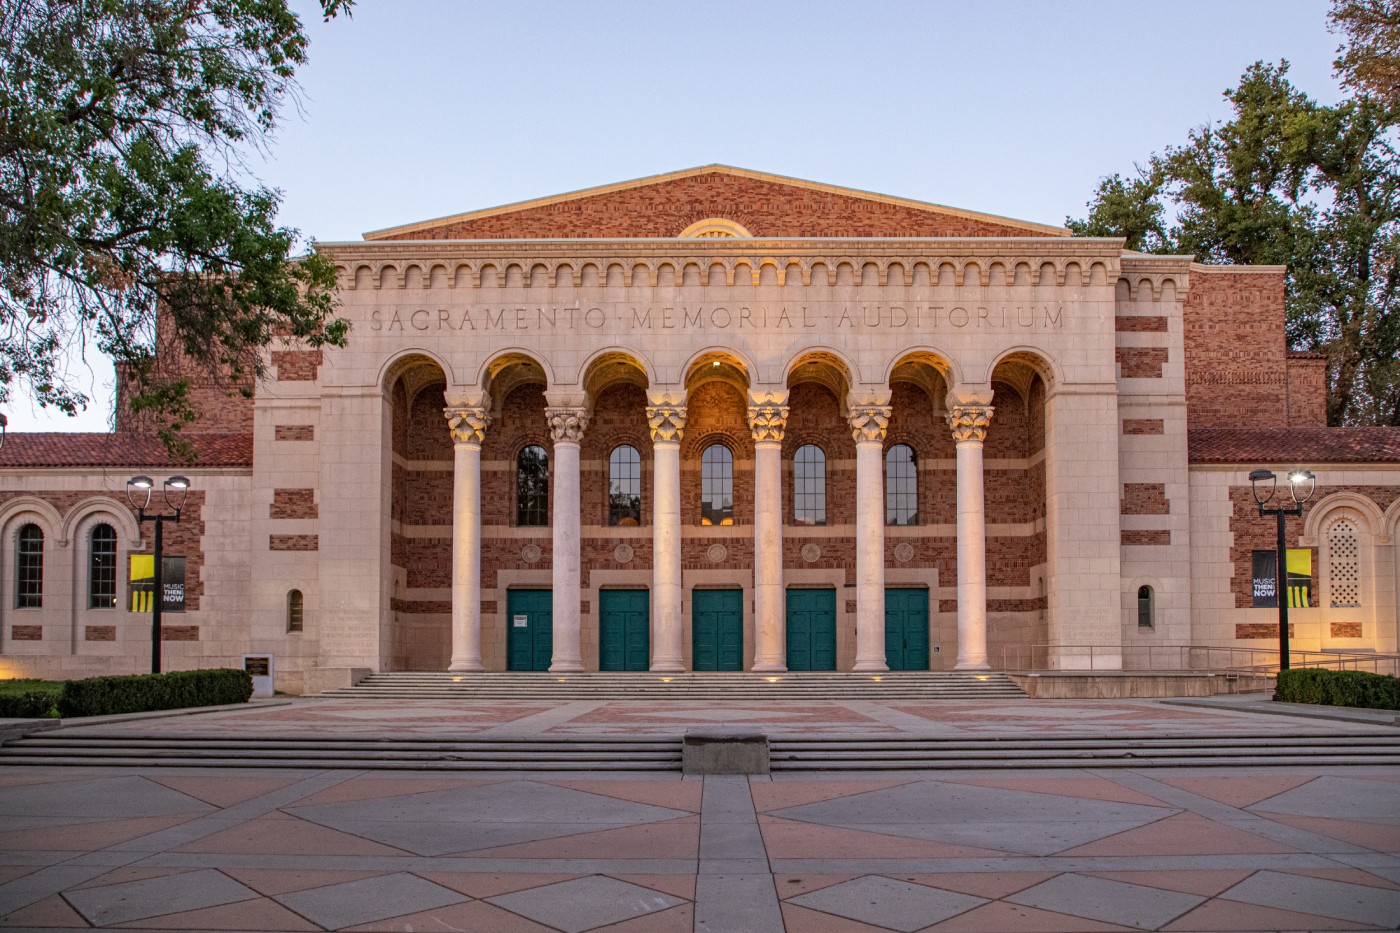 Image of the Sacramento Memorial Auditorium building